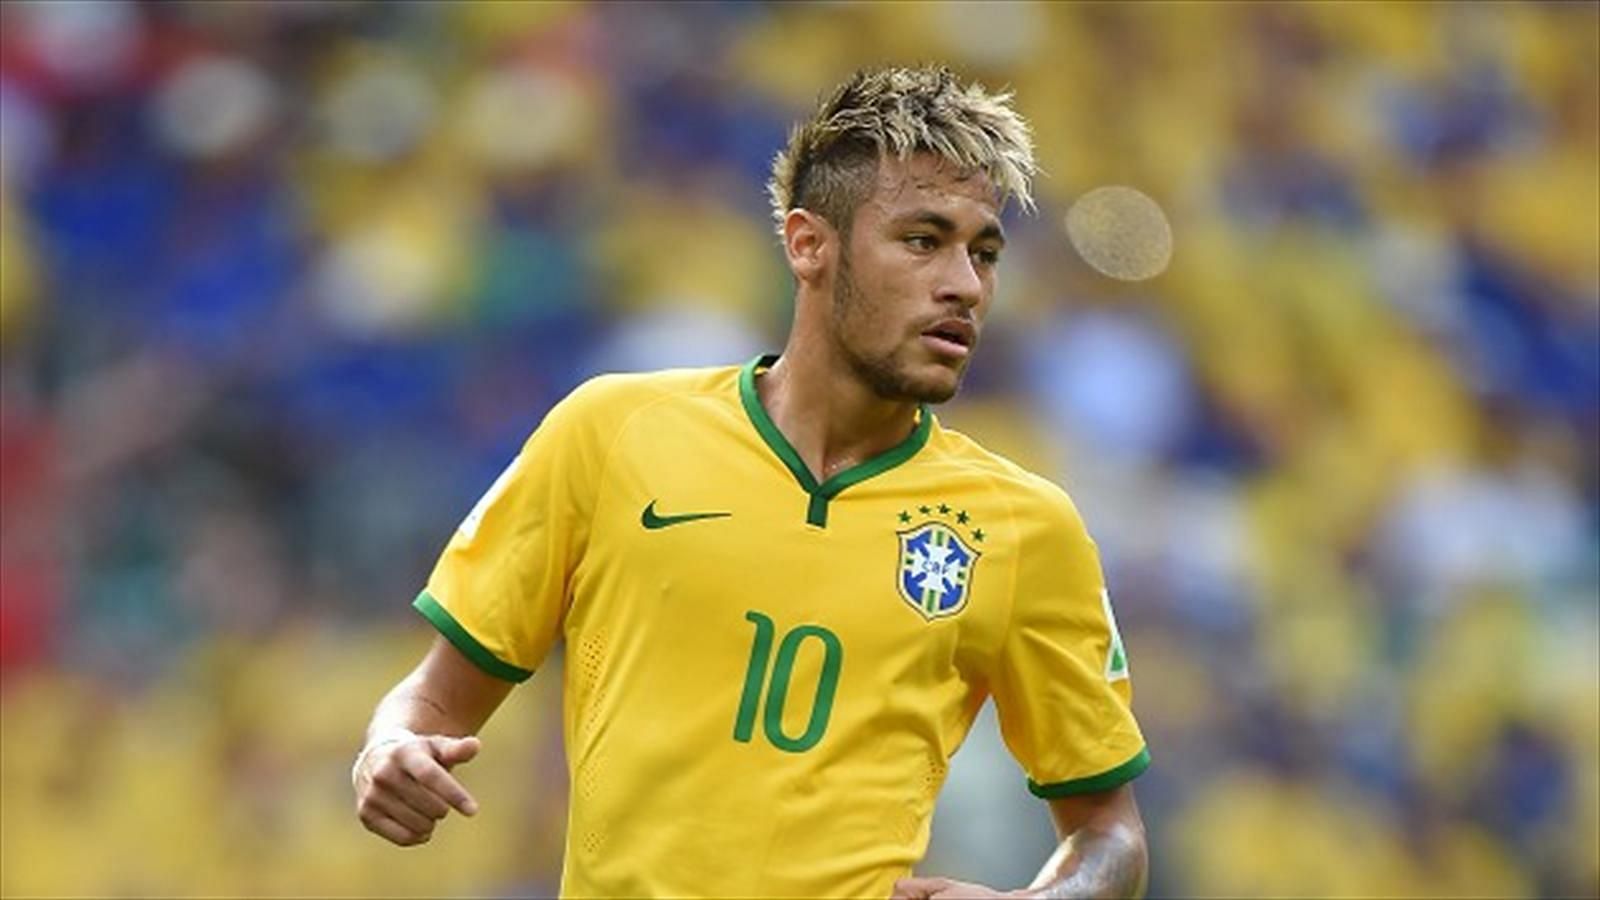 Neymar is among the latest crop of world-class Brazilian talent in football.